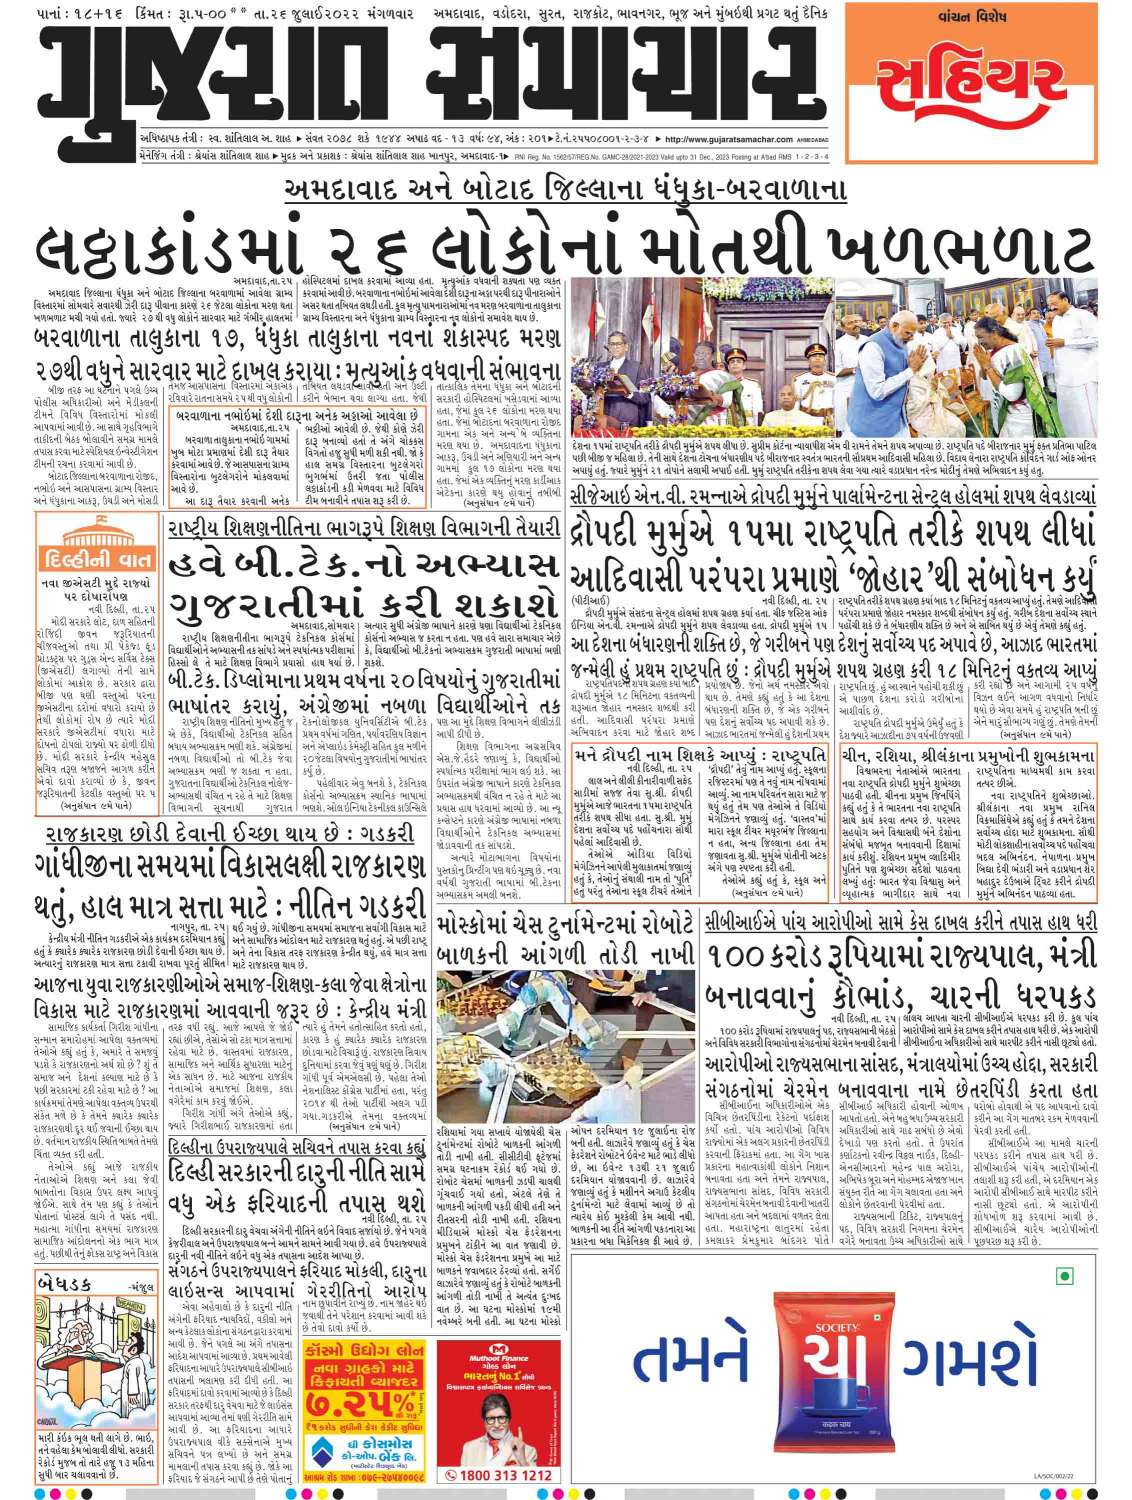 Gujarat Samachar Ads - Your Answer for Gujarati Advertisements